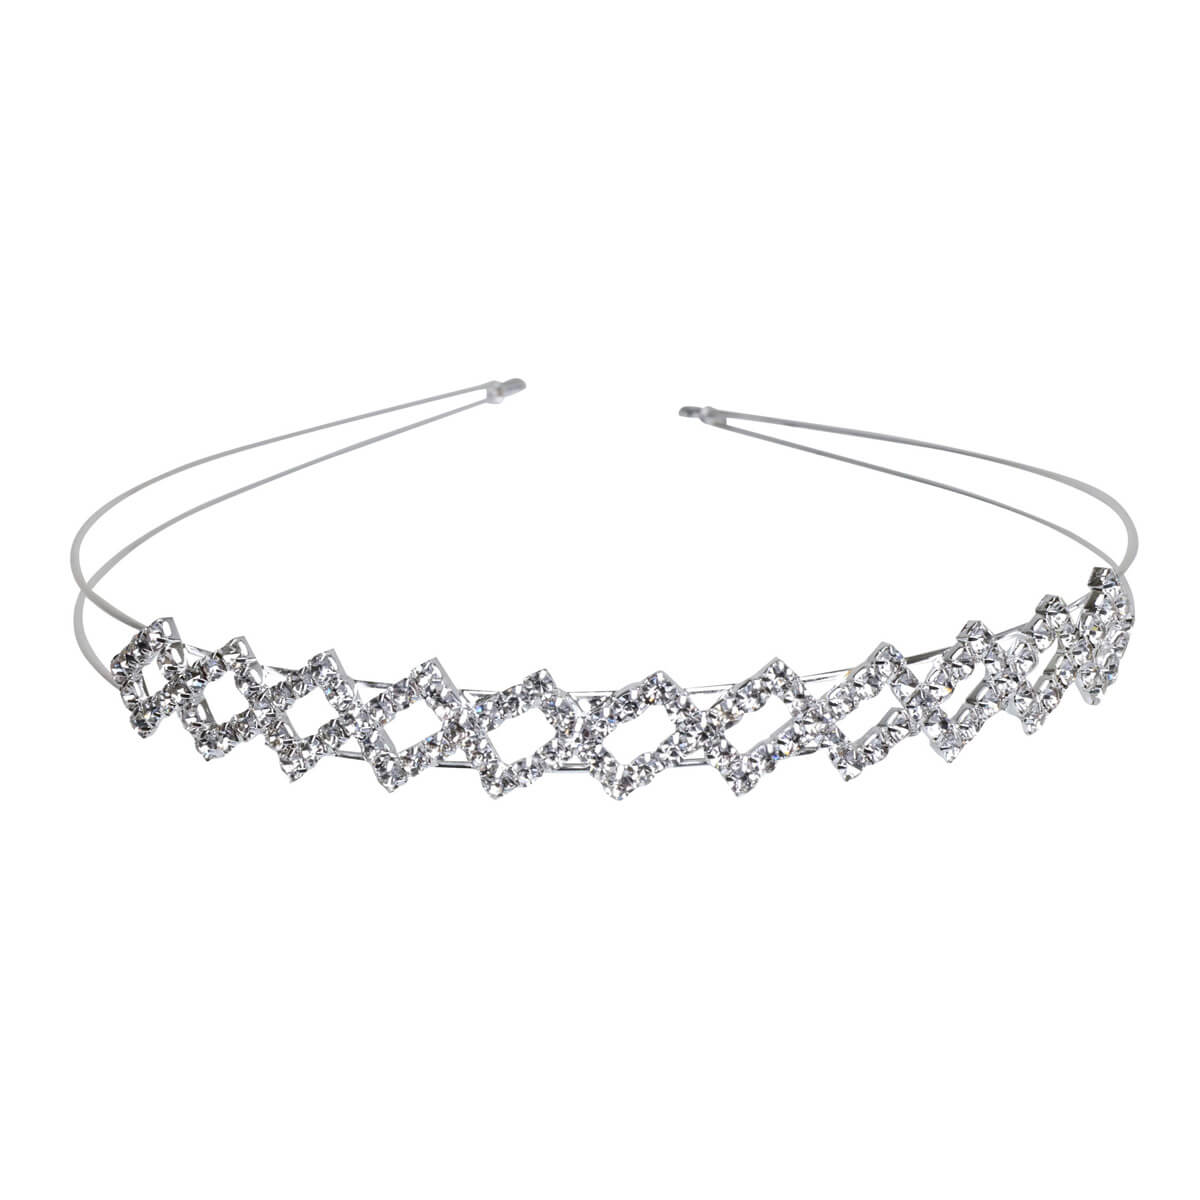 Glass stone tiara hairband